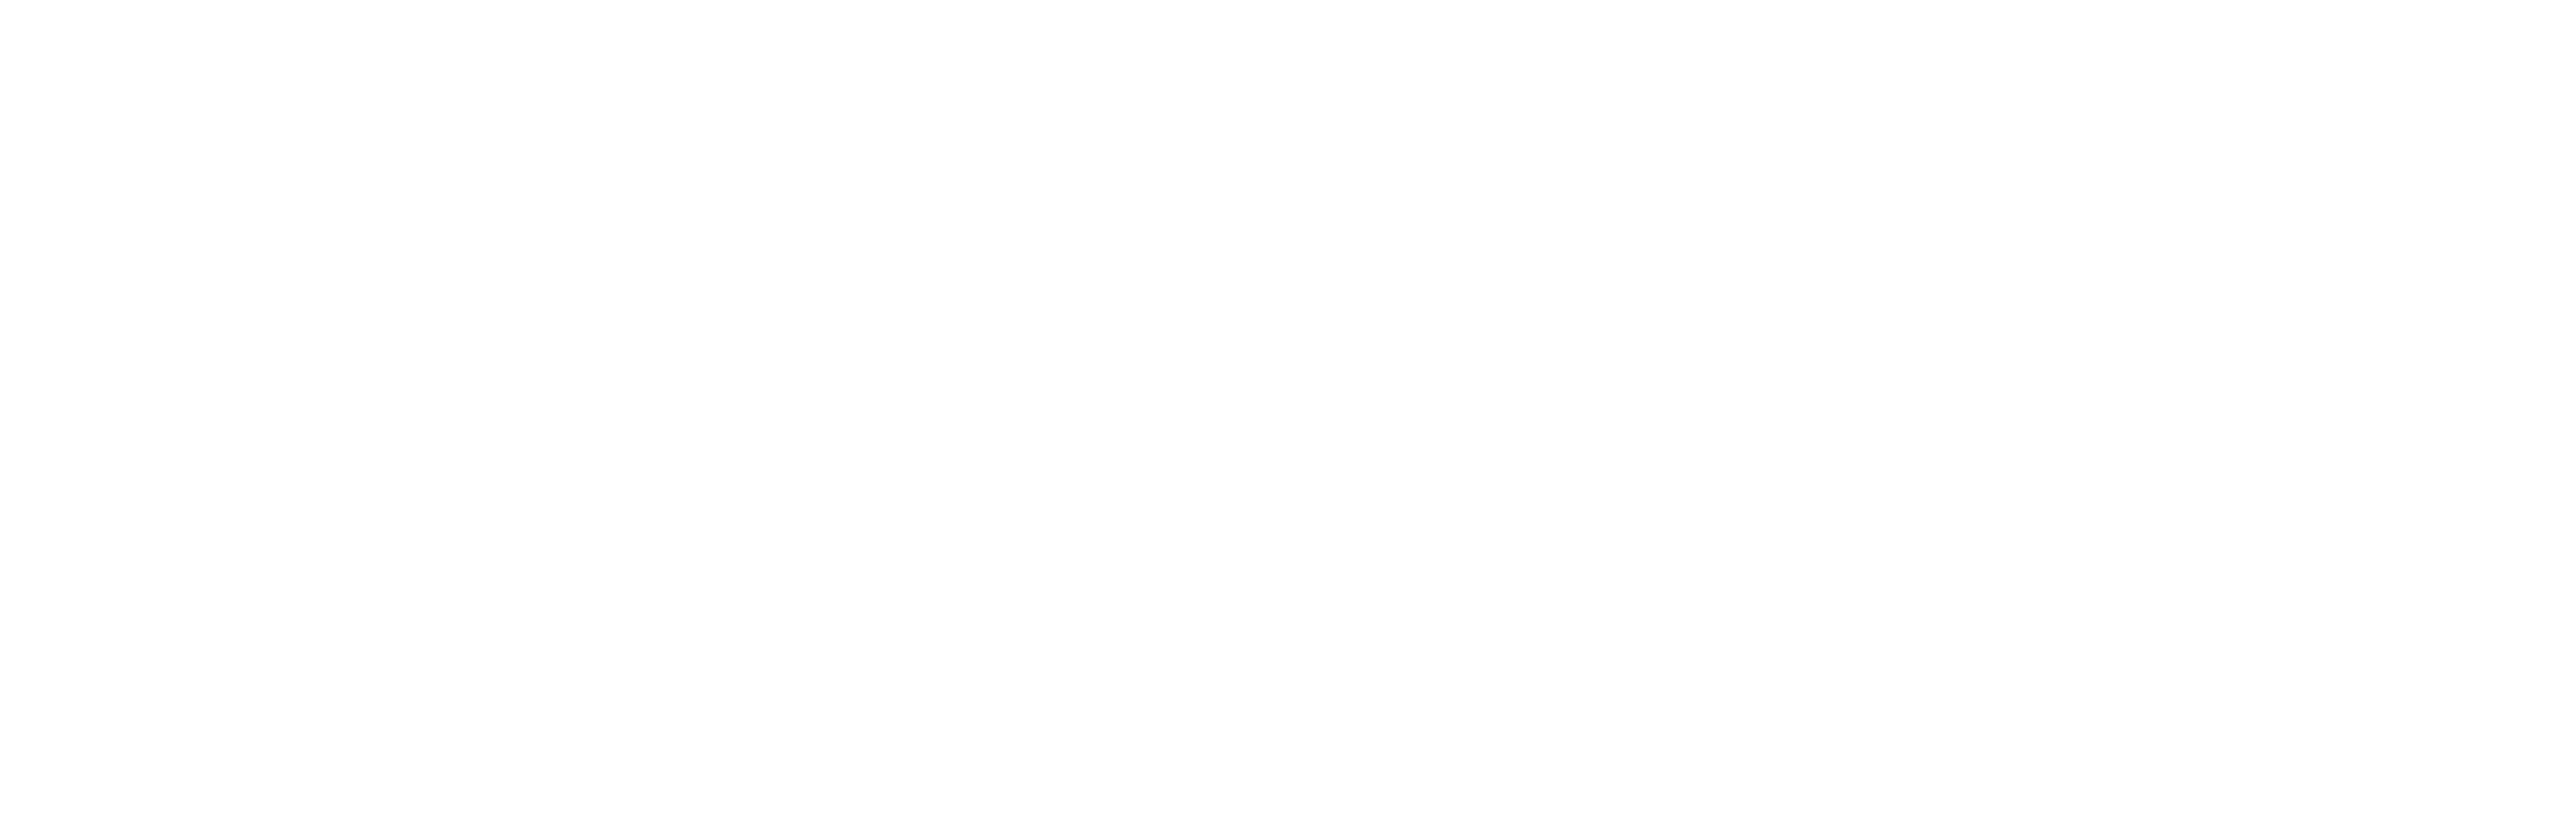 Impulsion Co., Ltd.